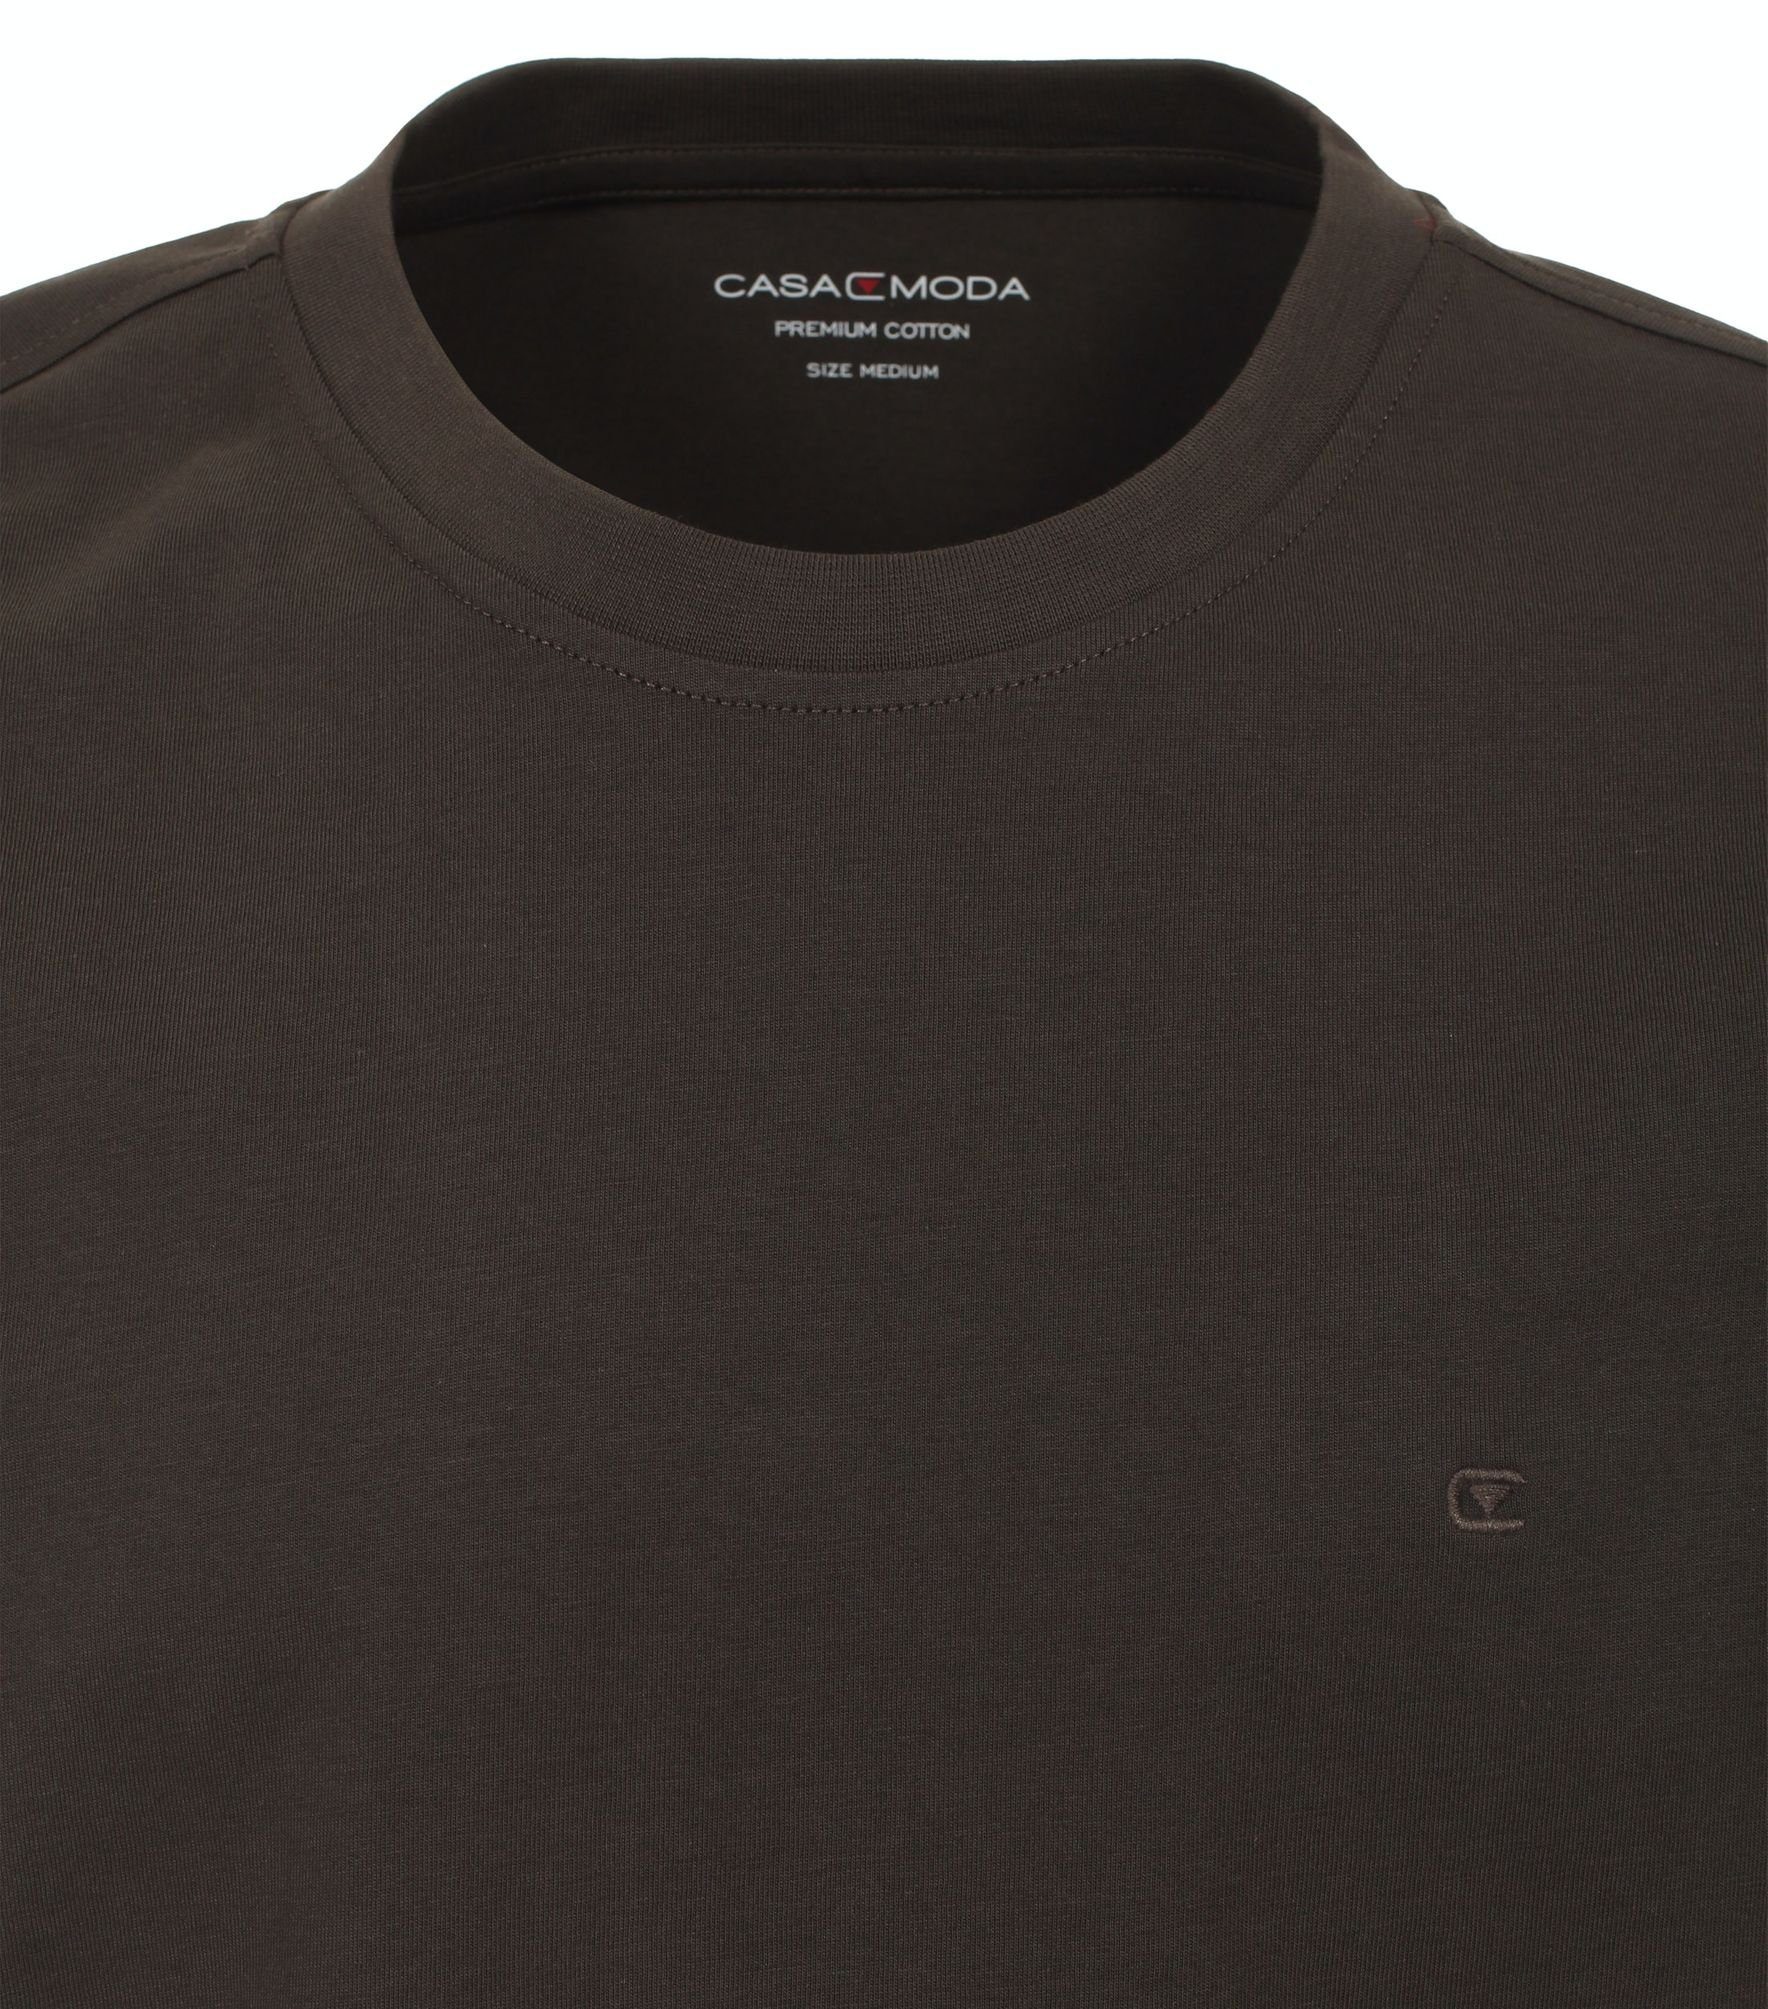 CASAMODA T-Shirt T-Shirt unifarben 004200 (336) grün